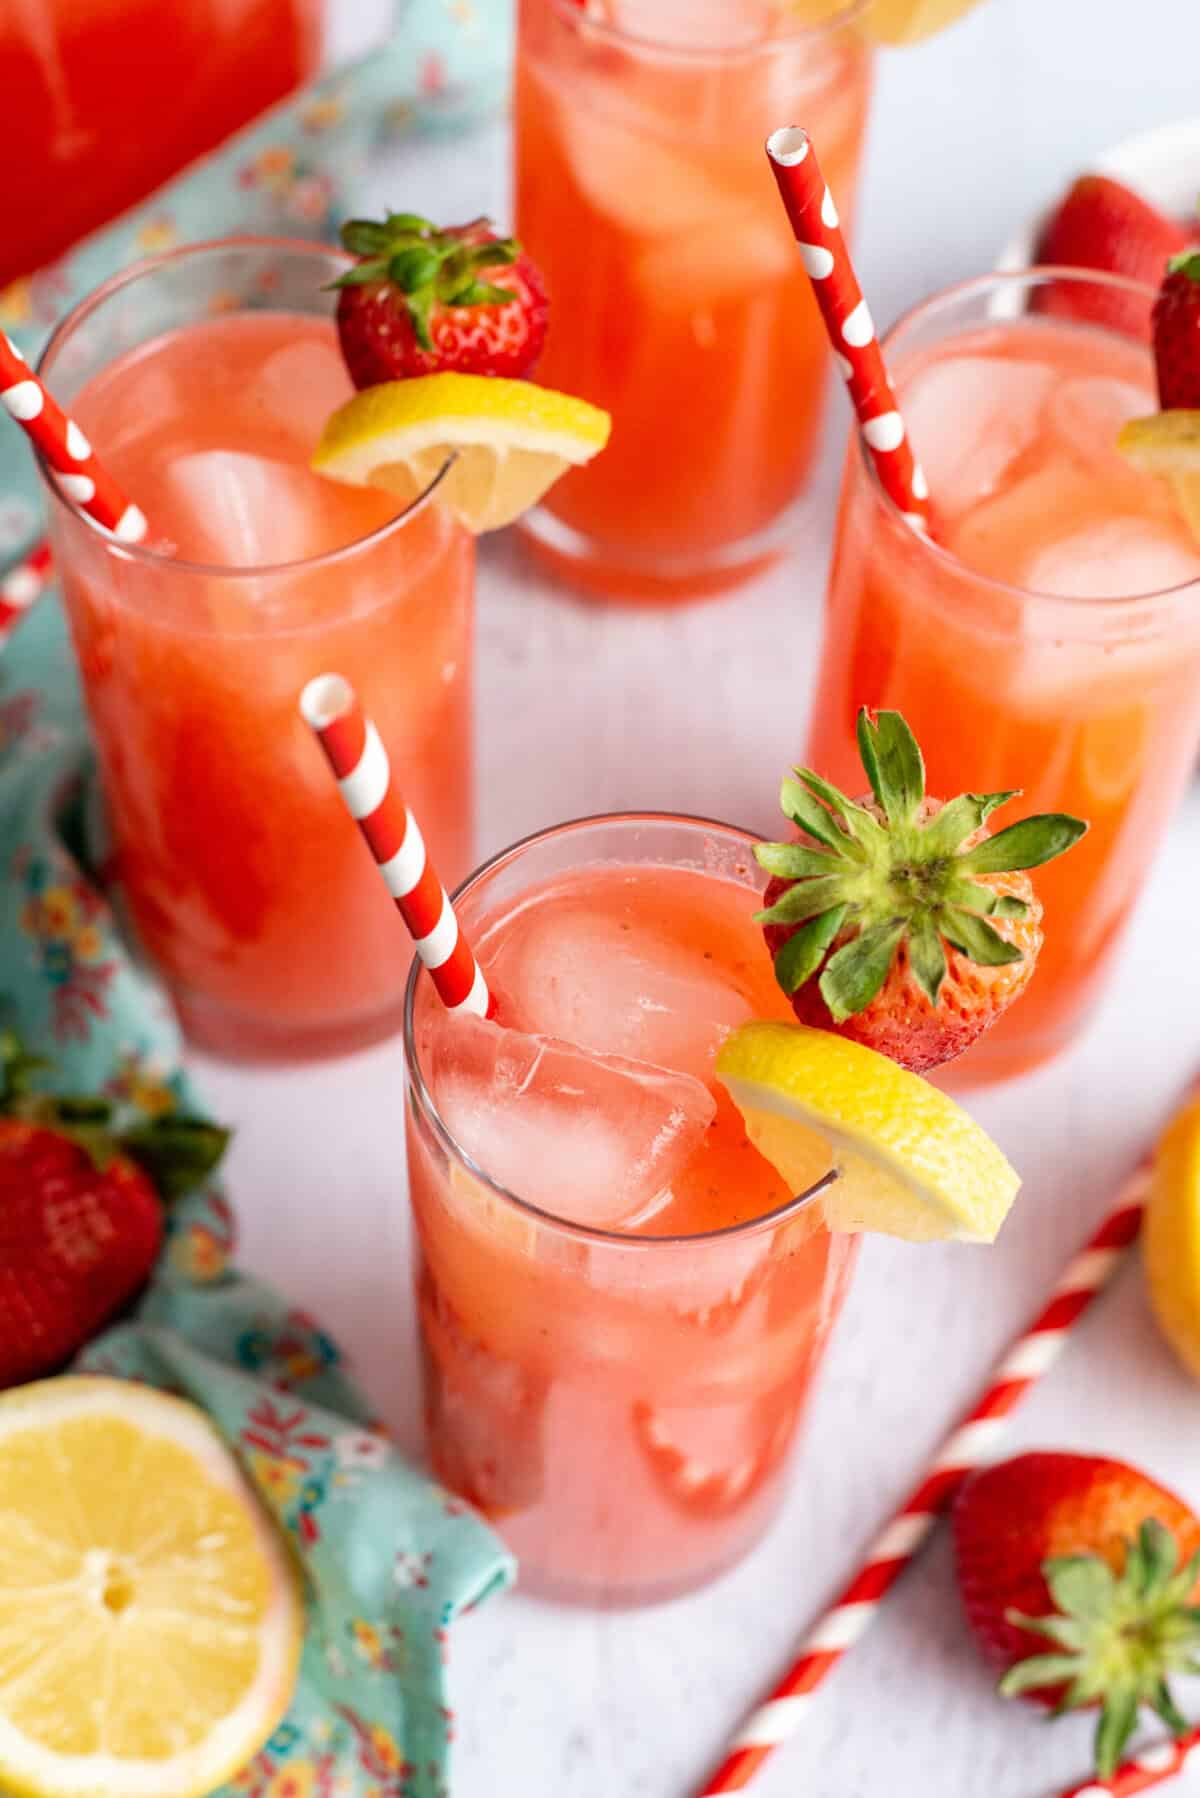 serve strawberryade over ice